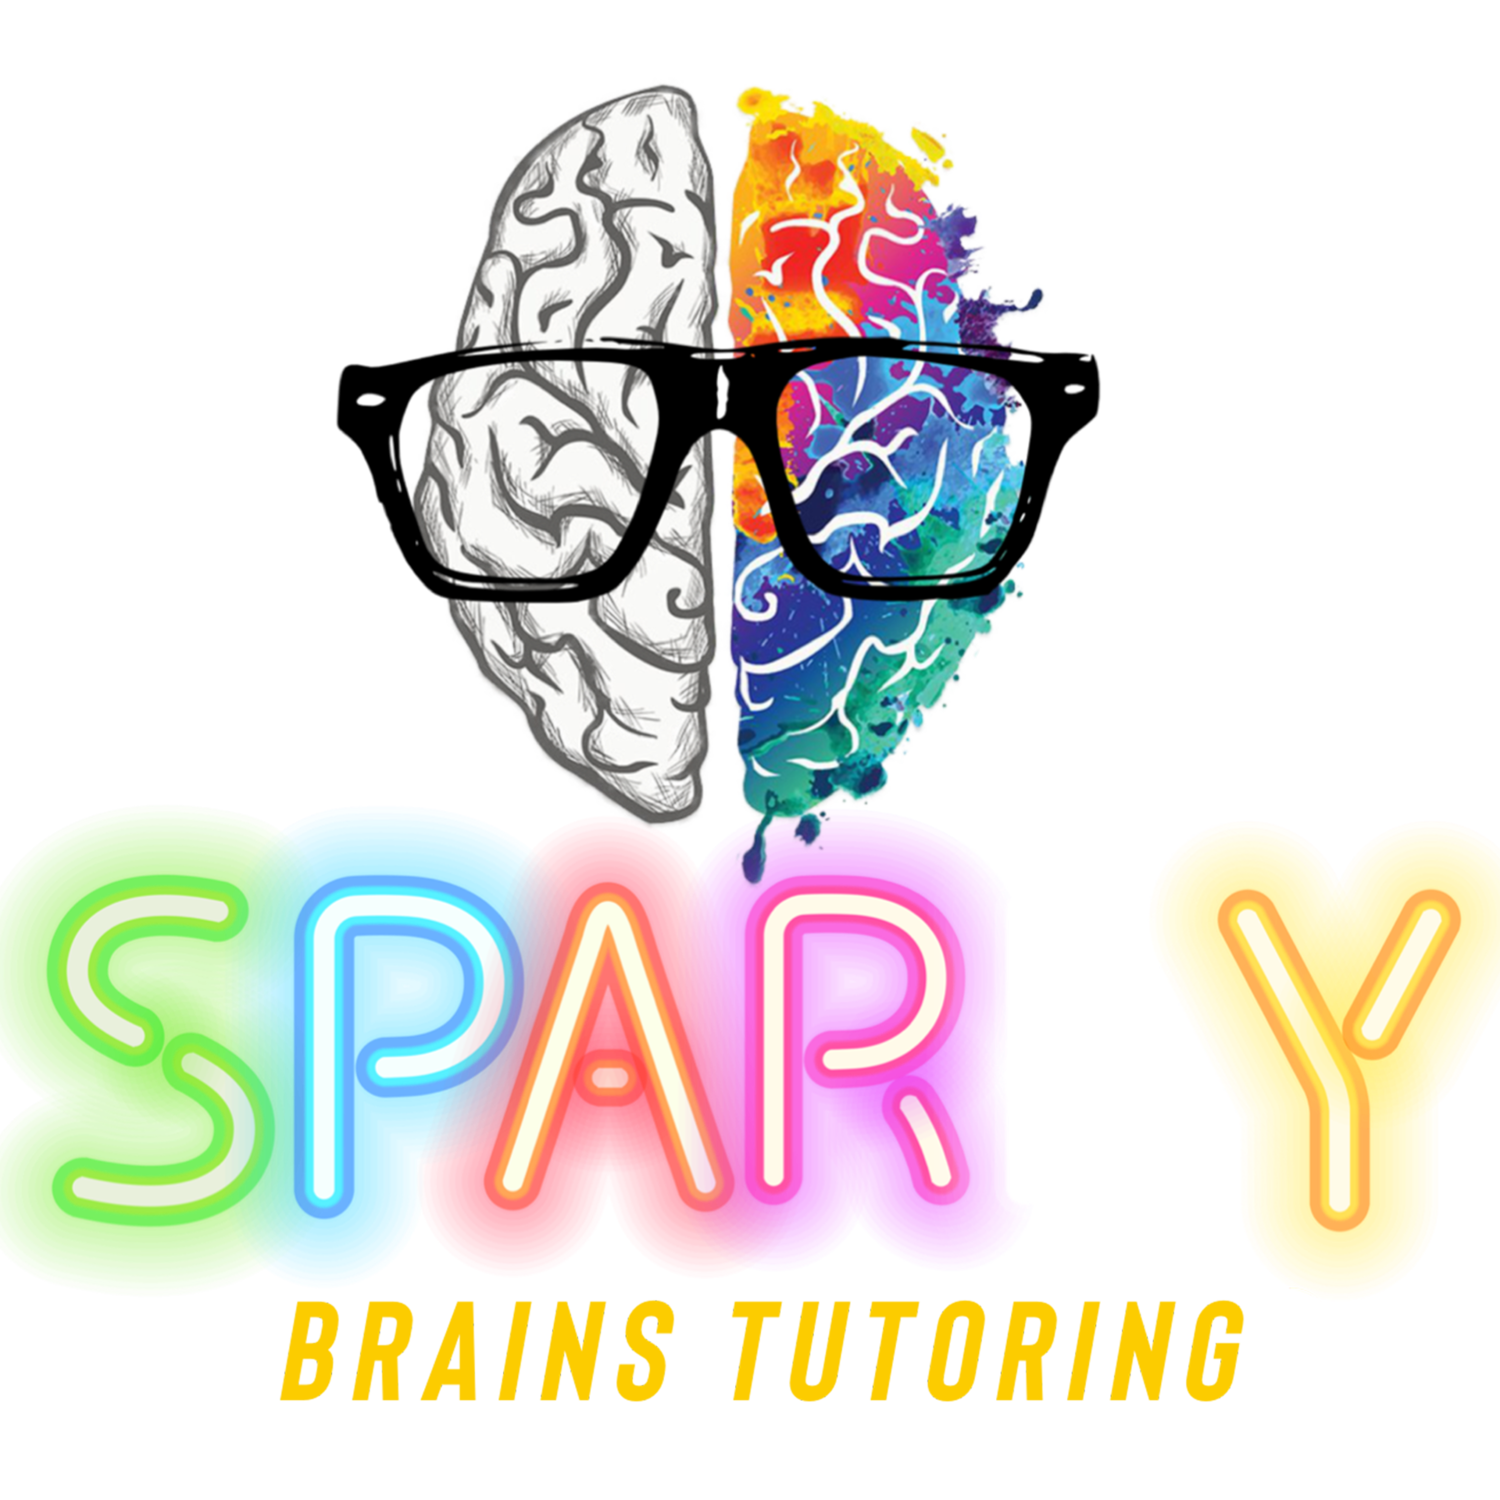 Sparky Brains Tutoring